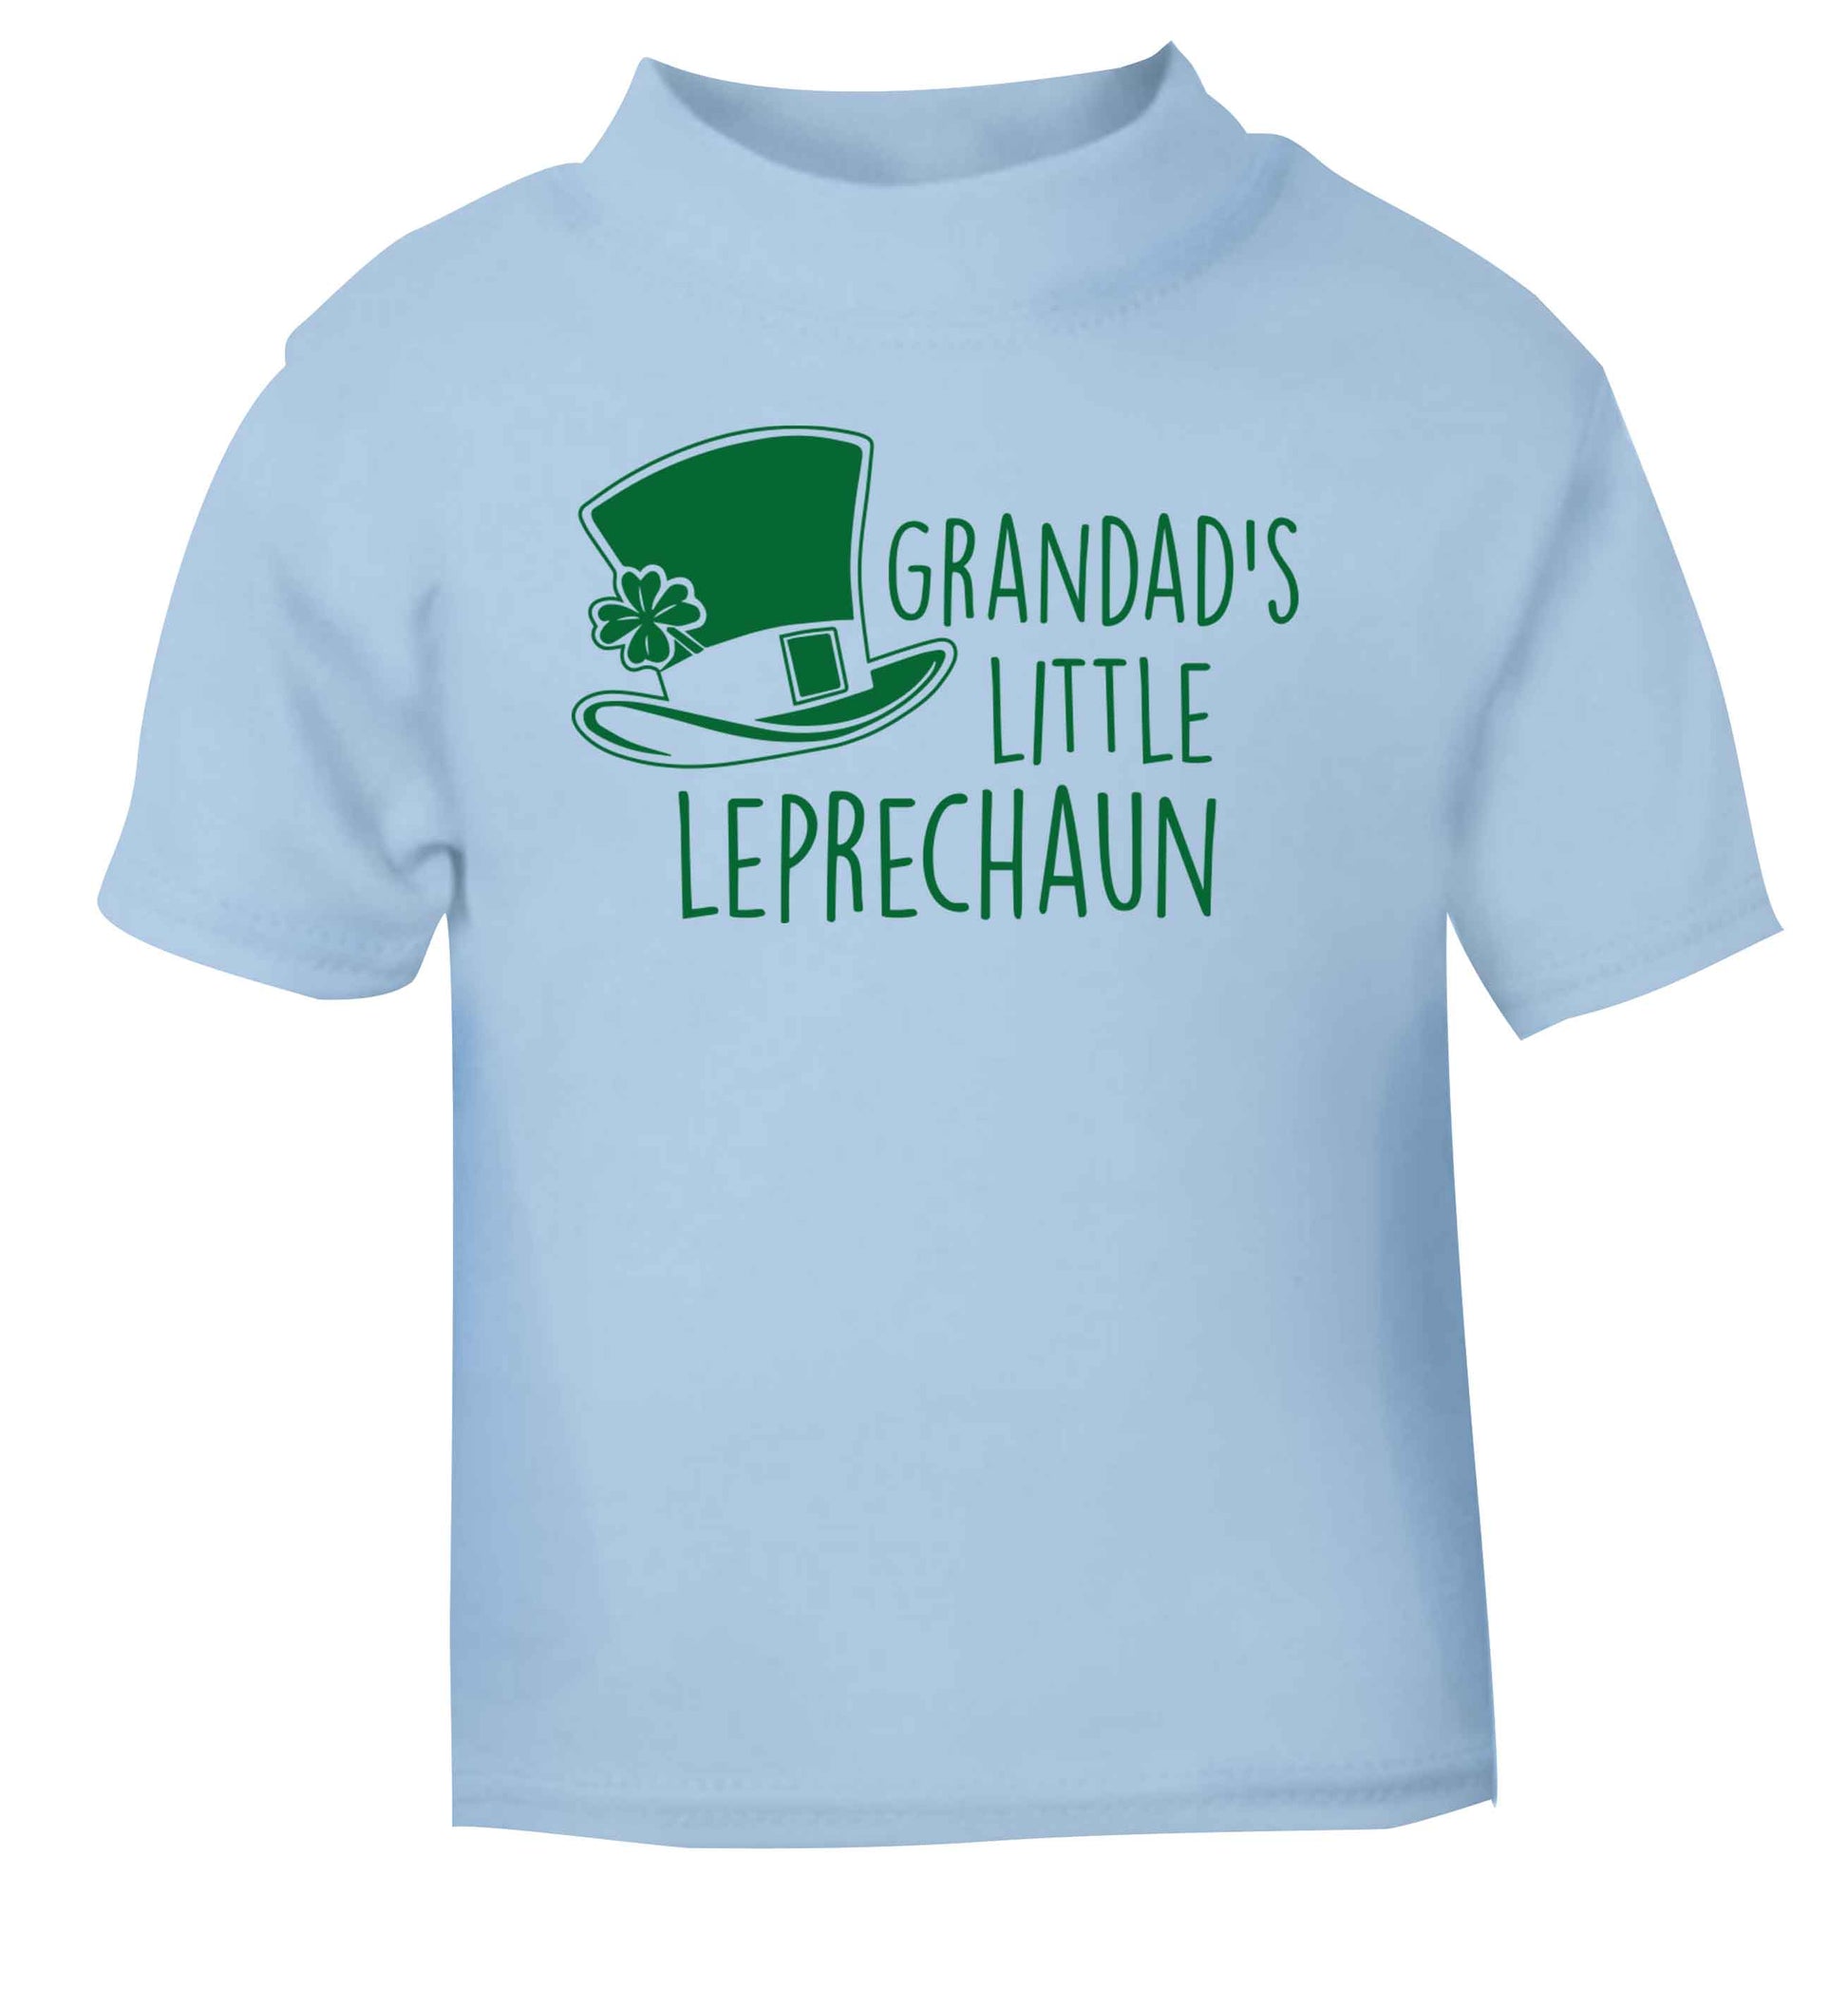 Grandad's little leprechaun light blue baby toddler Tshirt 2 Years